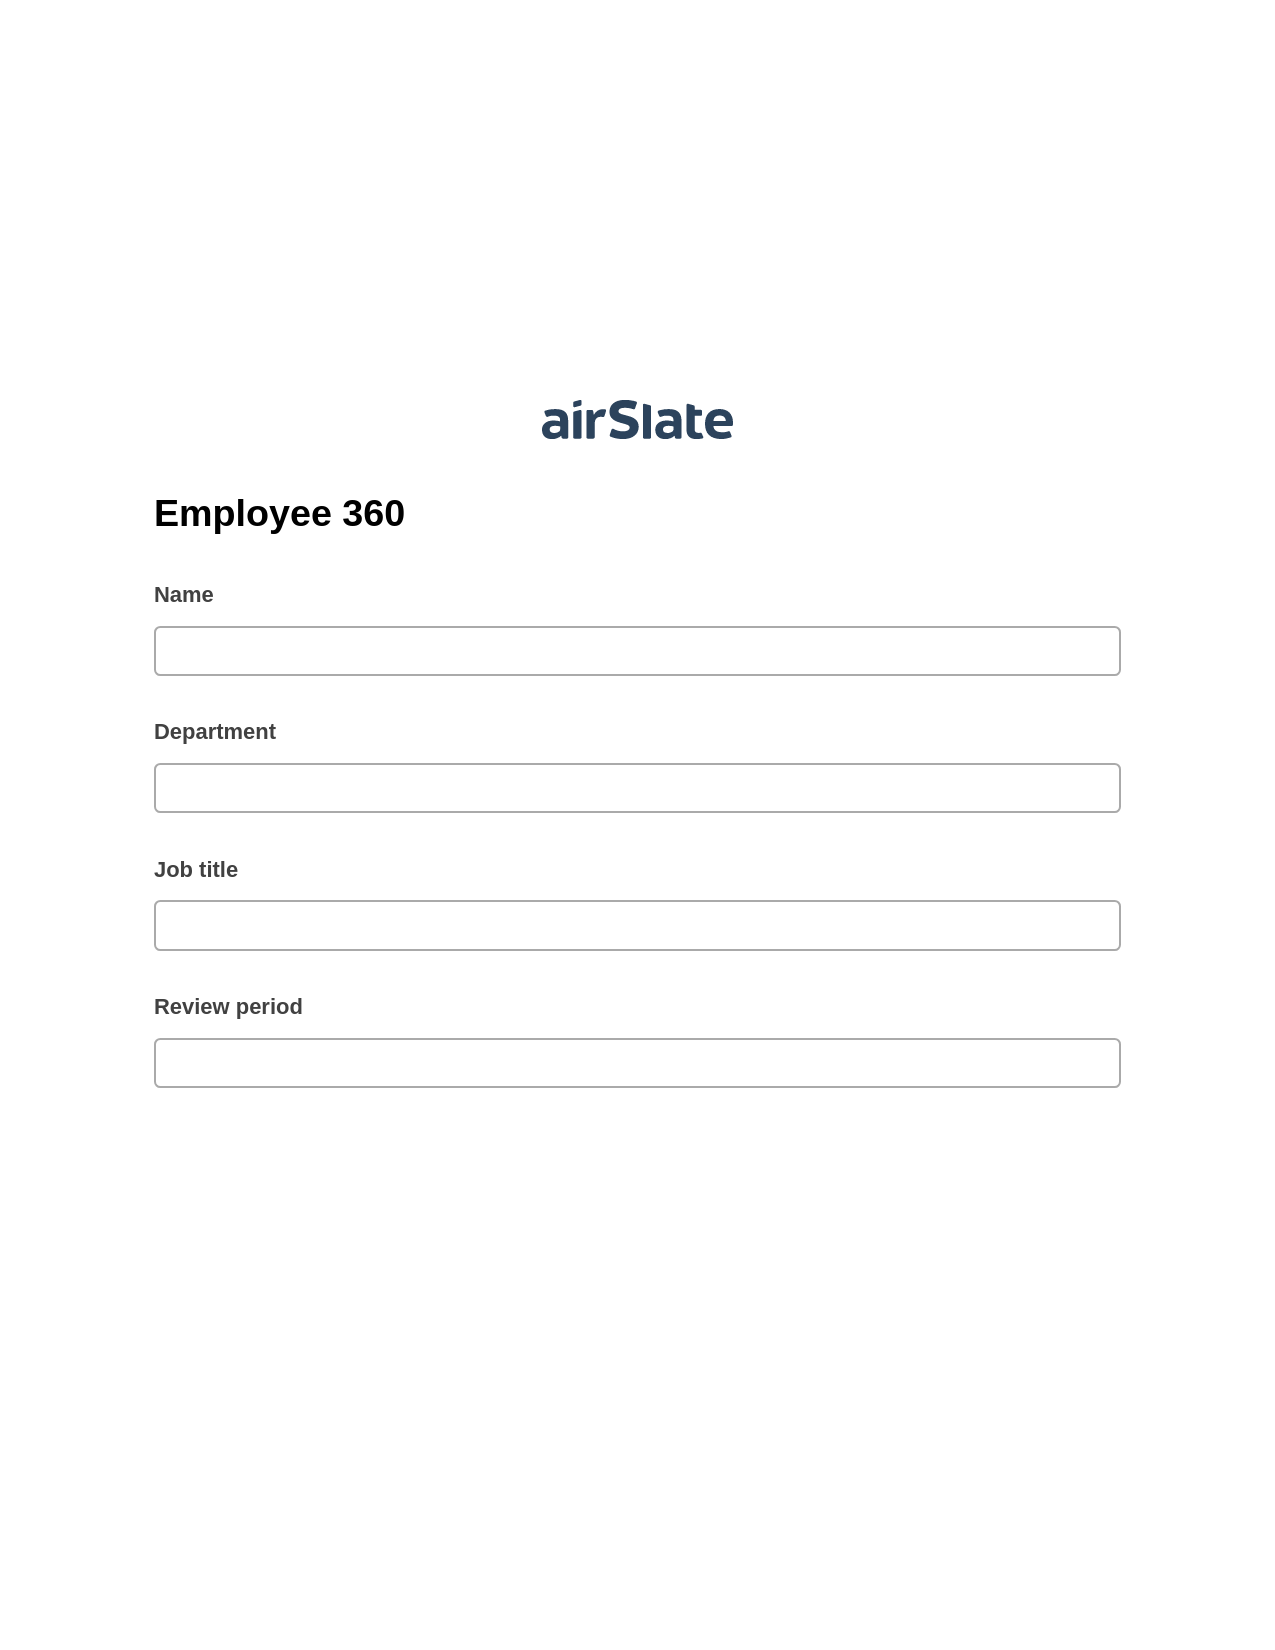 Employee 360 Pre-fill from CSV File Bot, Invoke Salesforce Process Bot, Export to Google Sheet Bot